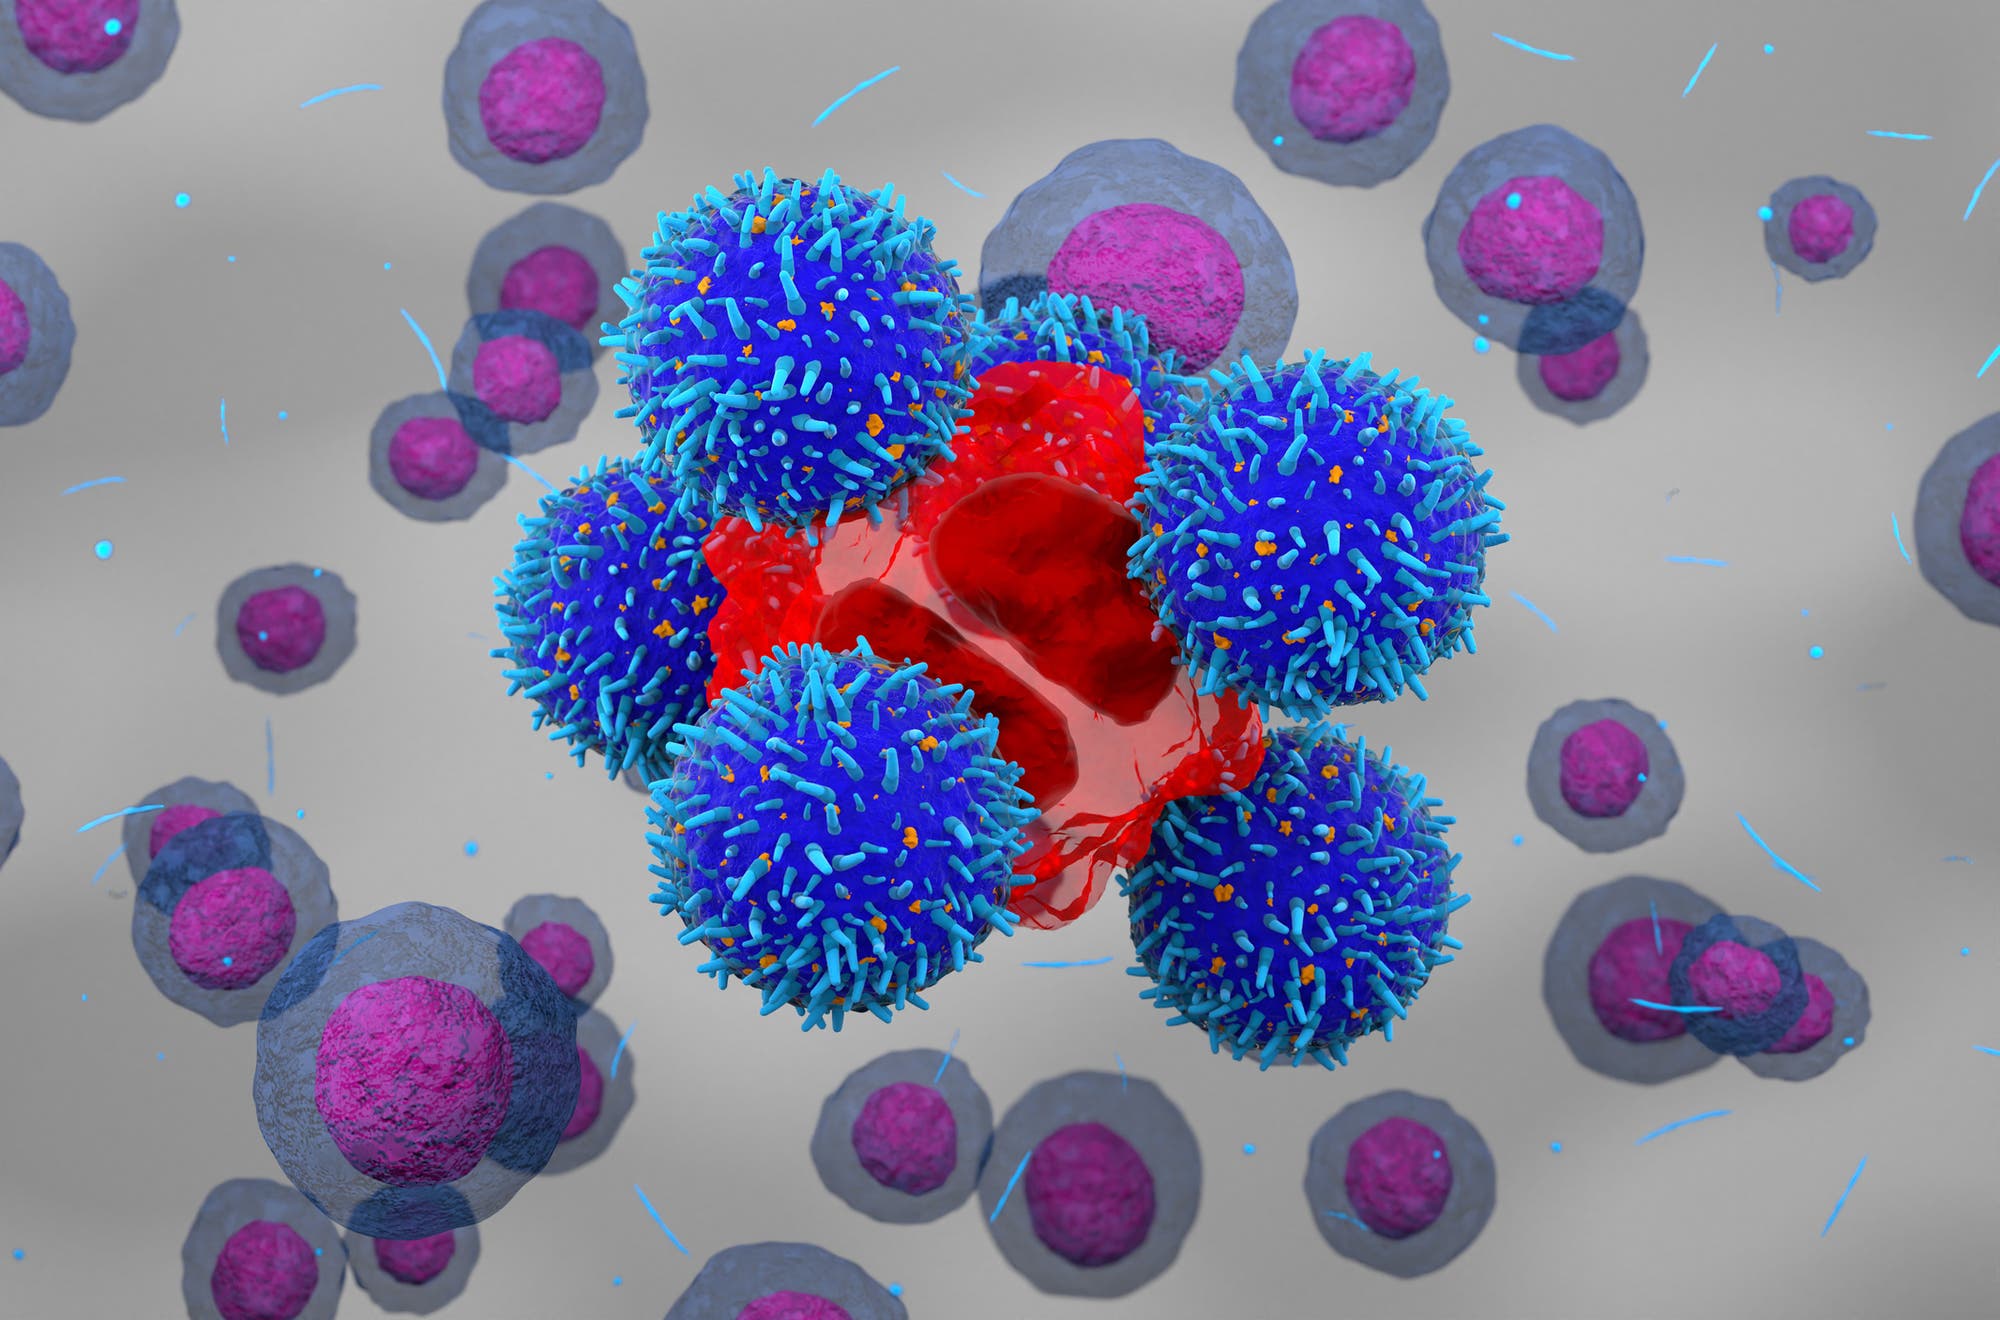 CAR-T-Zellen greifen eine Krebszelle an